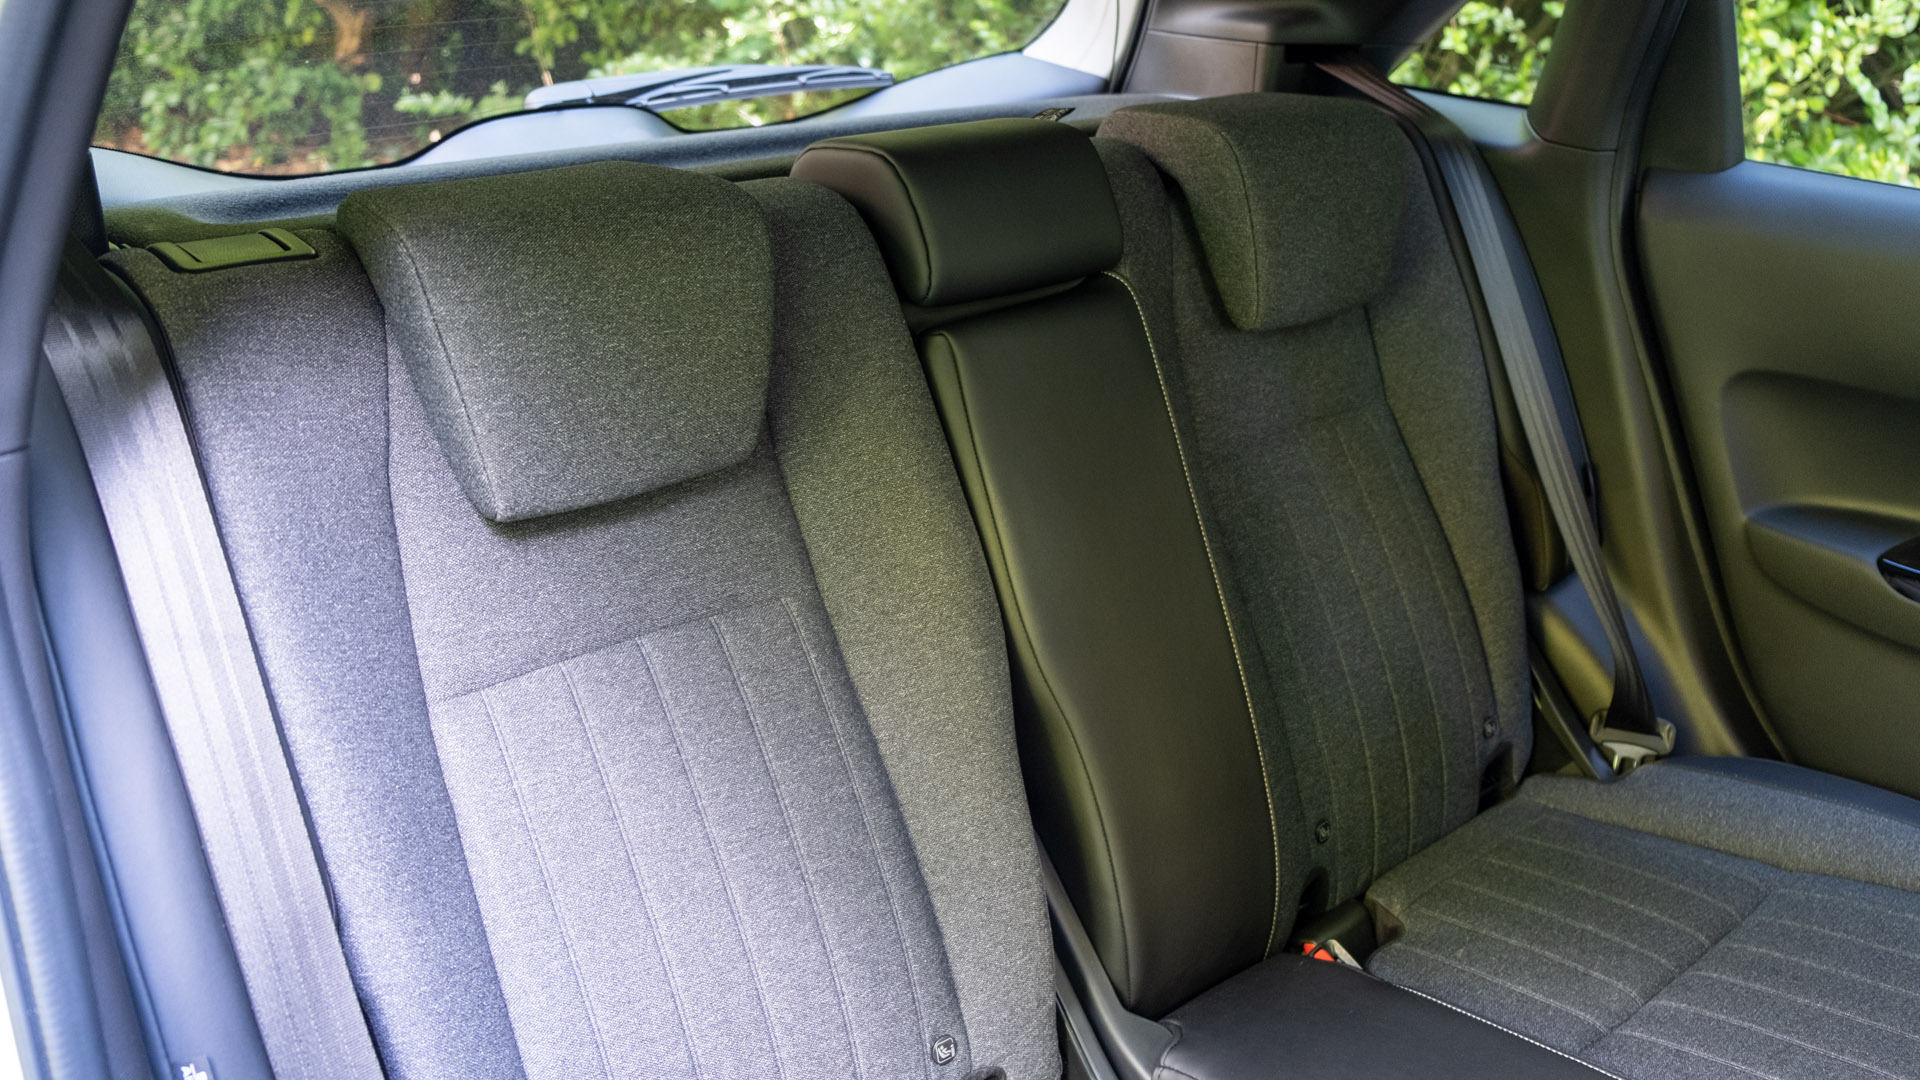 Honda Jazz rear seat comfort